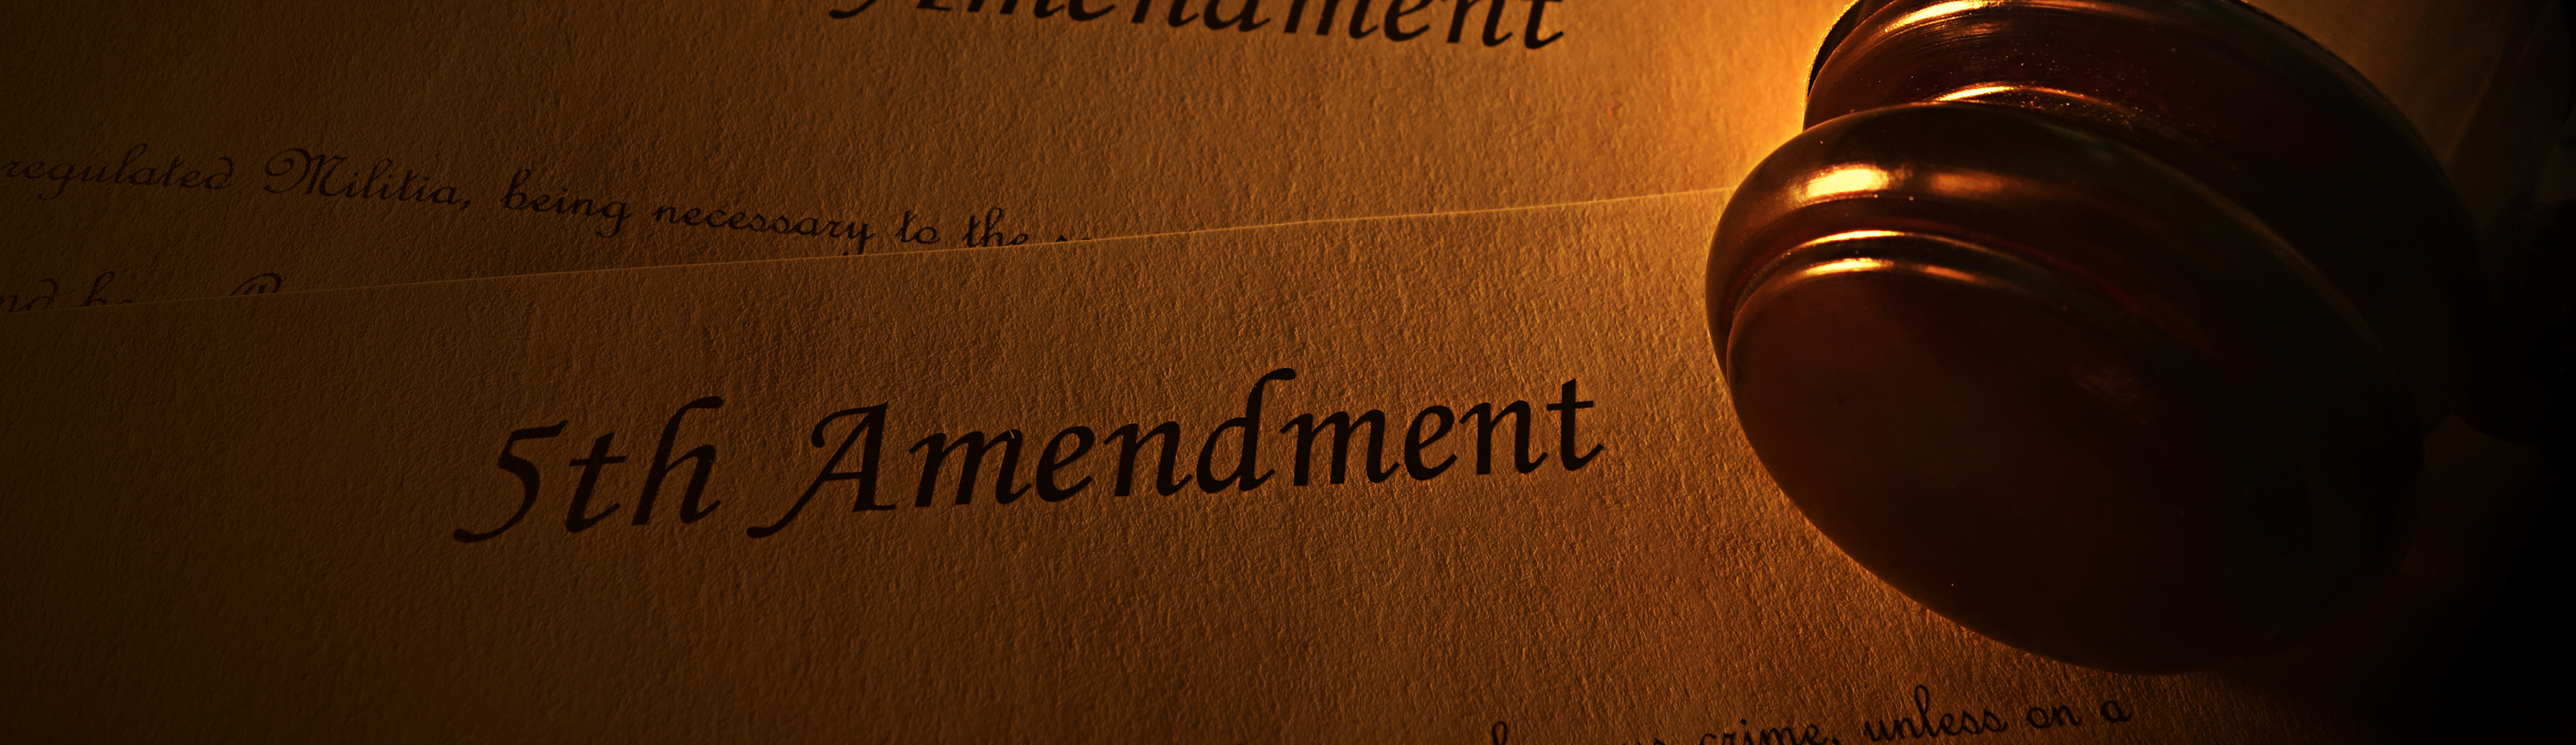 Goodell DeVries Prevails in Fifth Amendment Legal Ethics Case